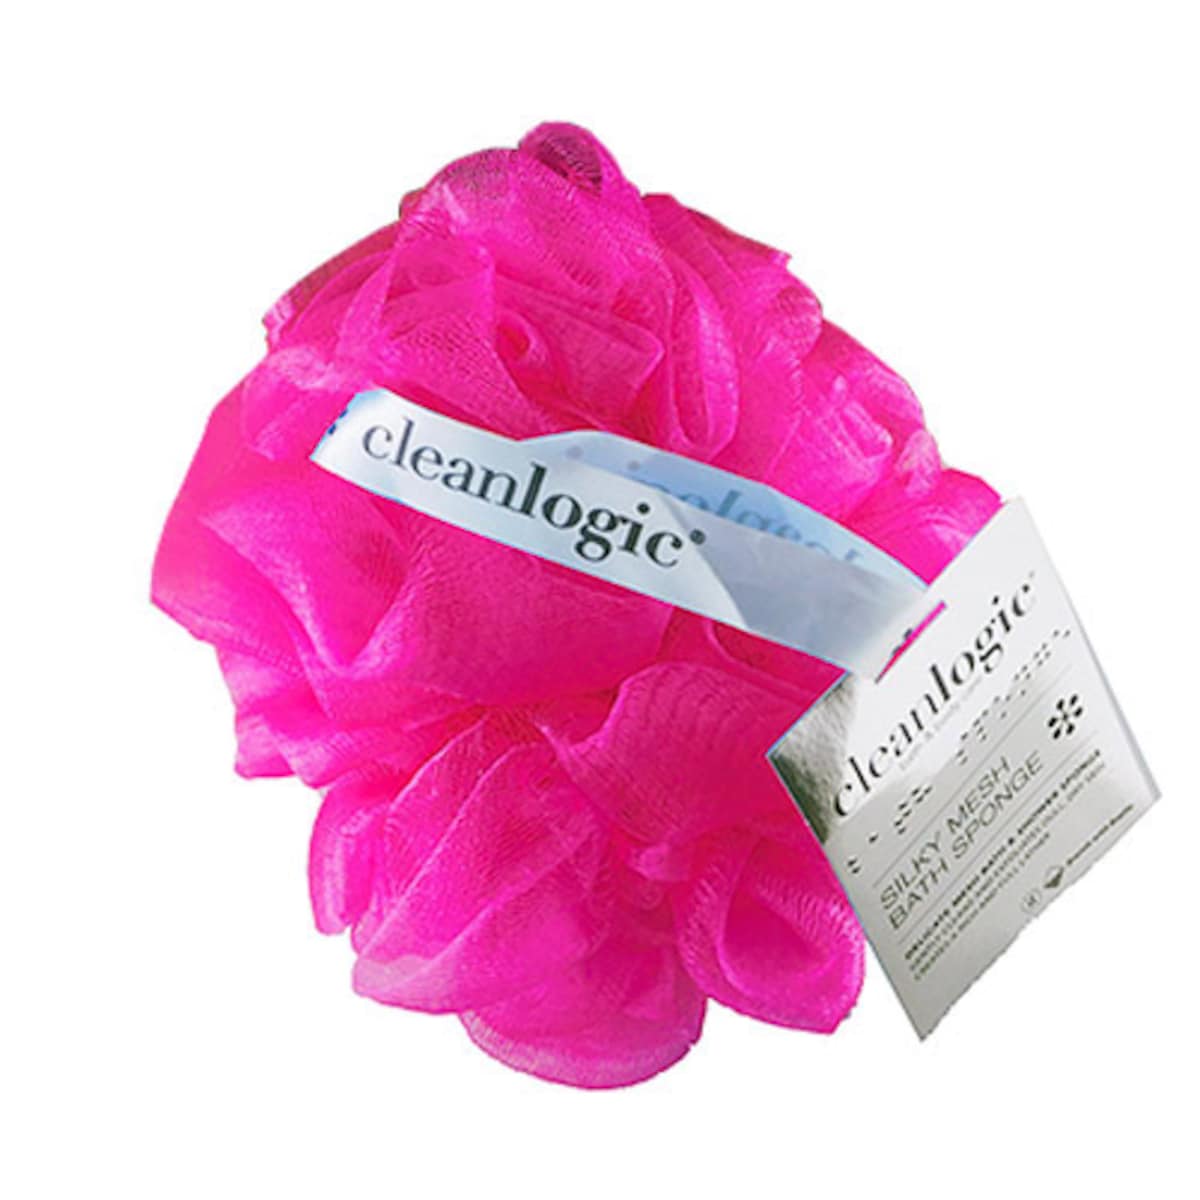 Cleanlogic - Cleanlogic, Bath Sponge, Silky Mesh, Shop